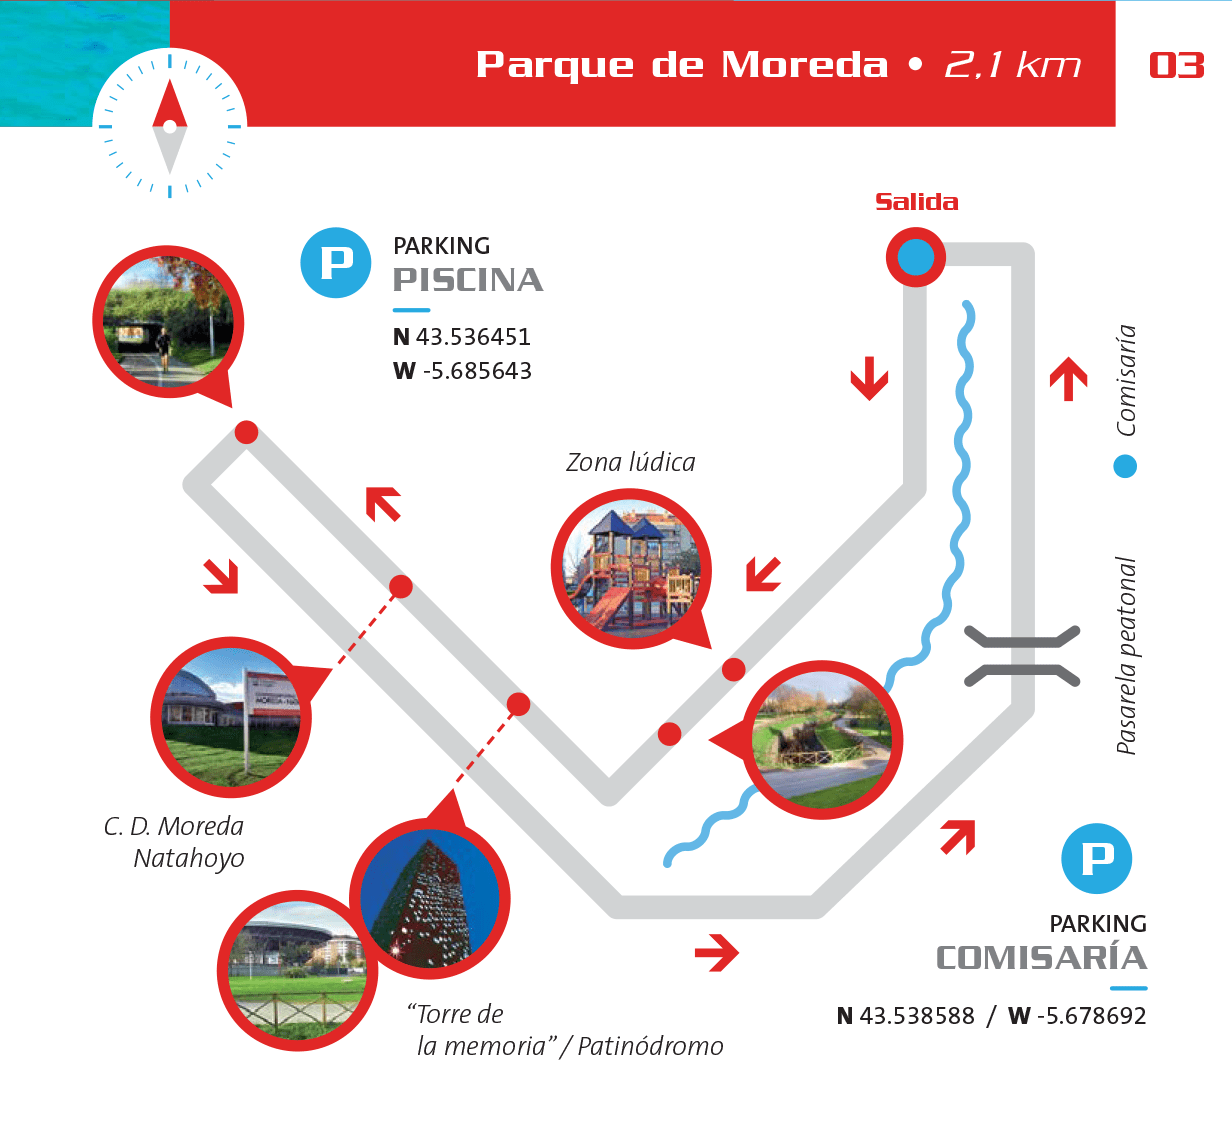 Detalles de la ruta por Moreda, Gijón